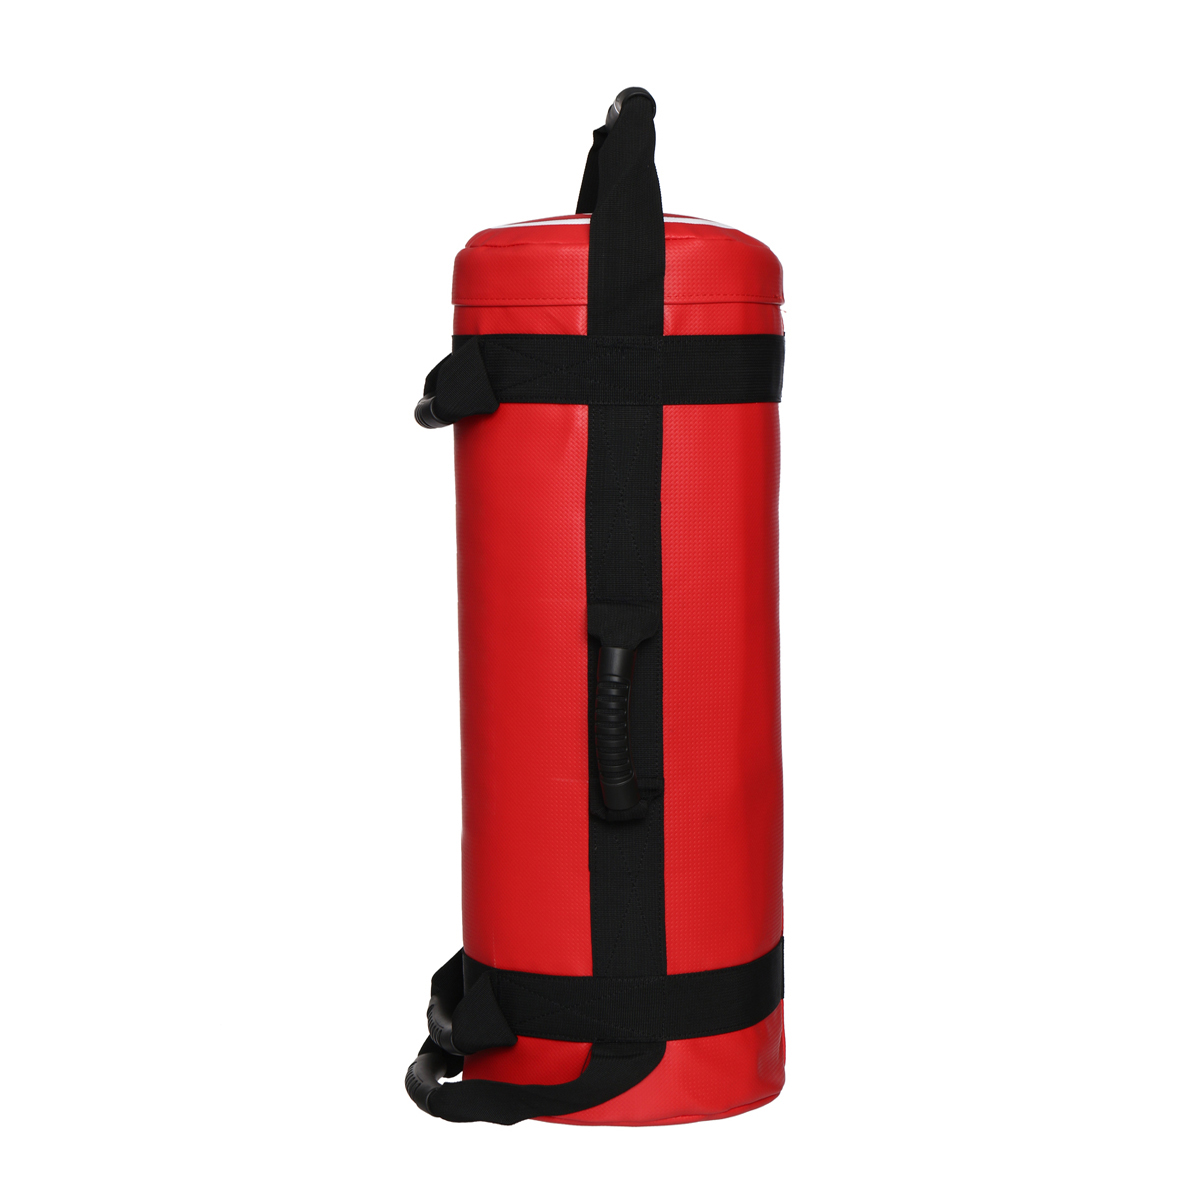 15-30KG-Red-Power-Bag-Weight-Lifting-Sandbag-Outdoor-Indoor-Gym-Fitness-Training-Sandbag-1545896-6